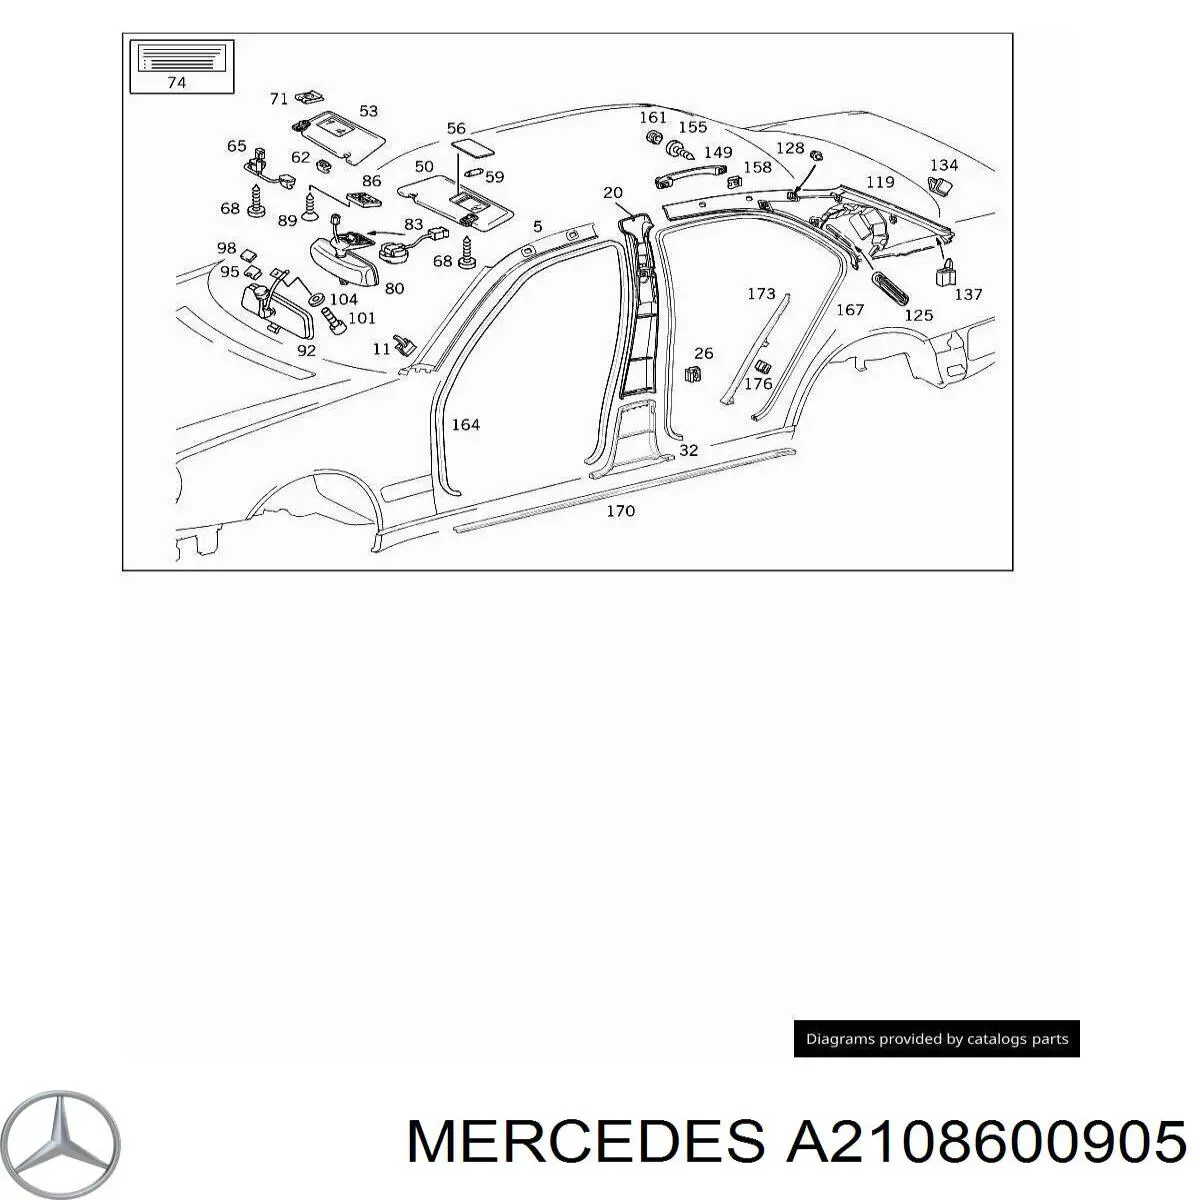 A2108600905 Mercedes airbag de cortina lateral izquierda